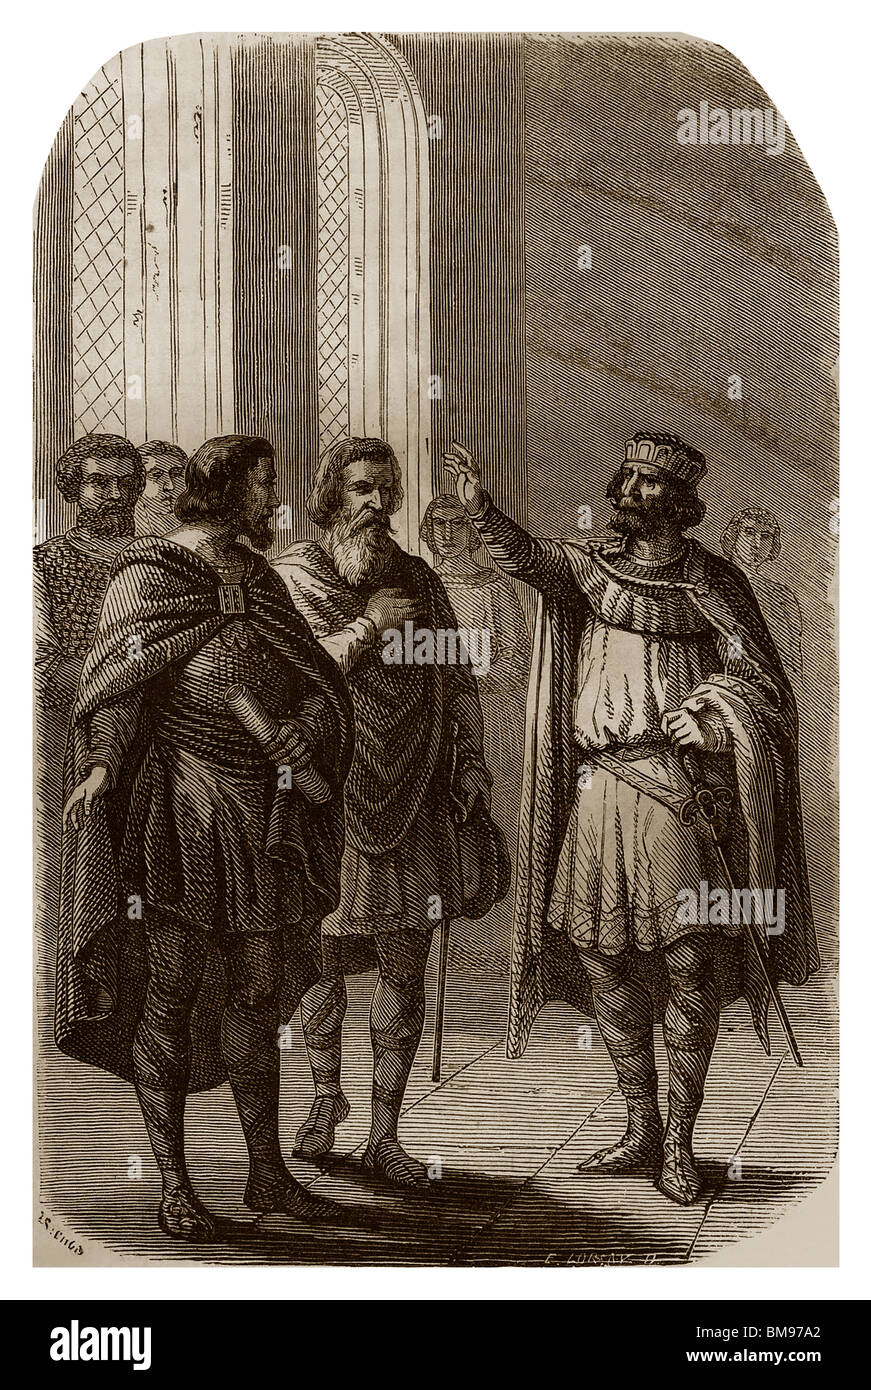 Carlomagno dando sus instrucciones a sus missi dominici. Foto de stock